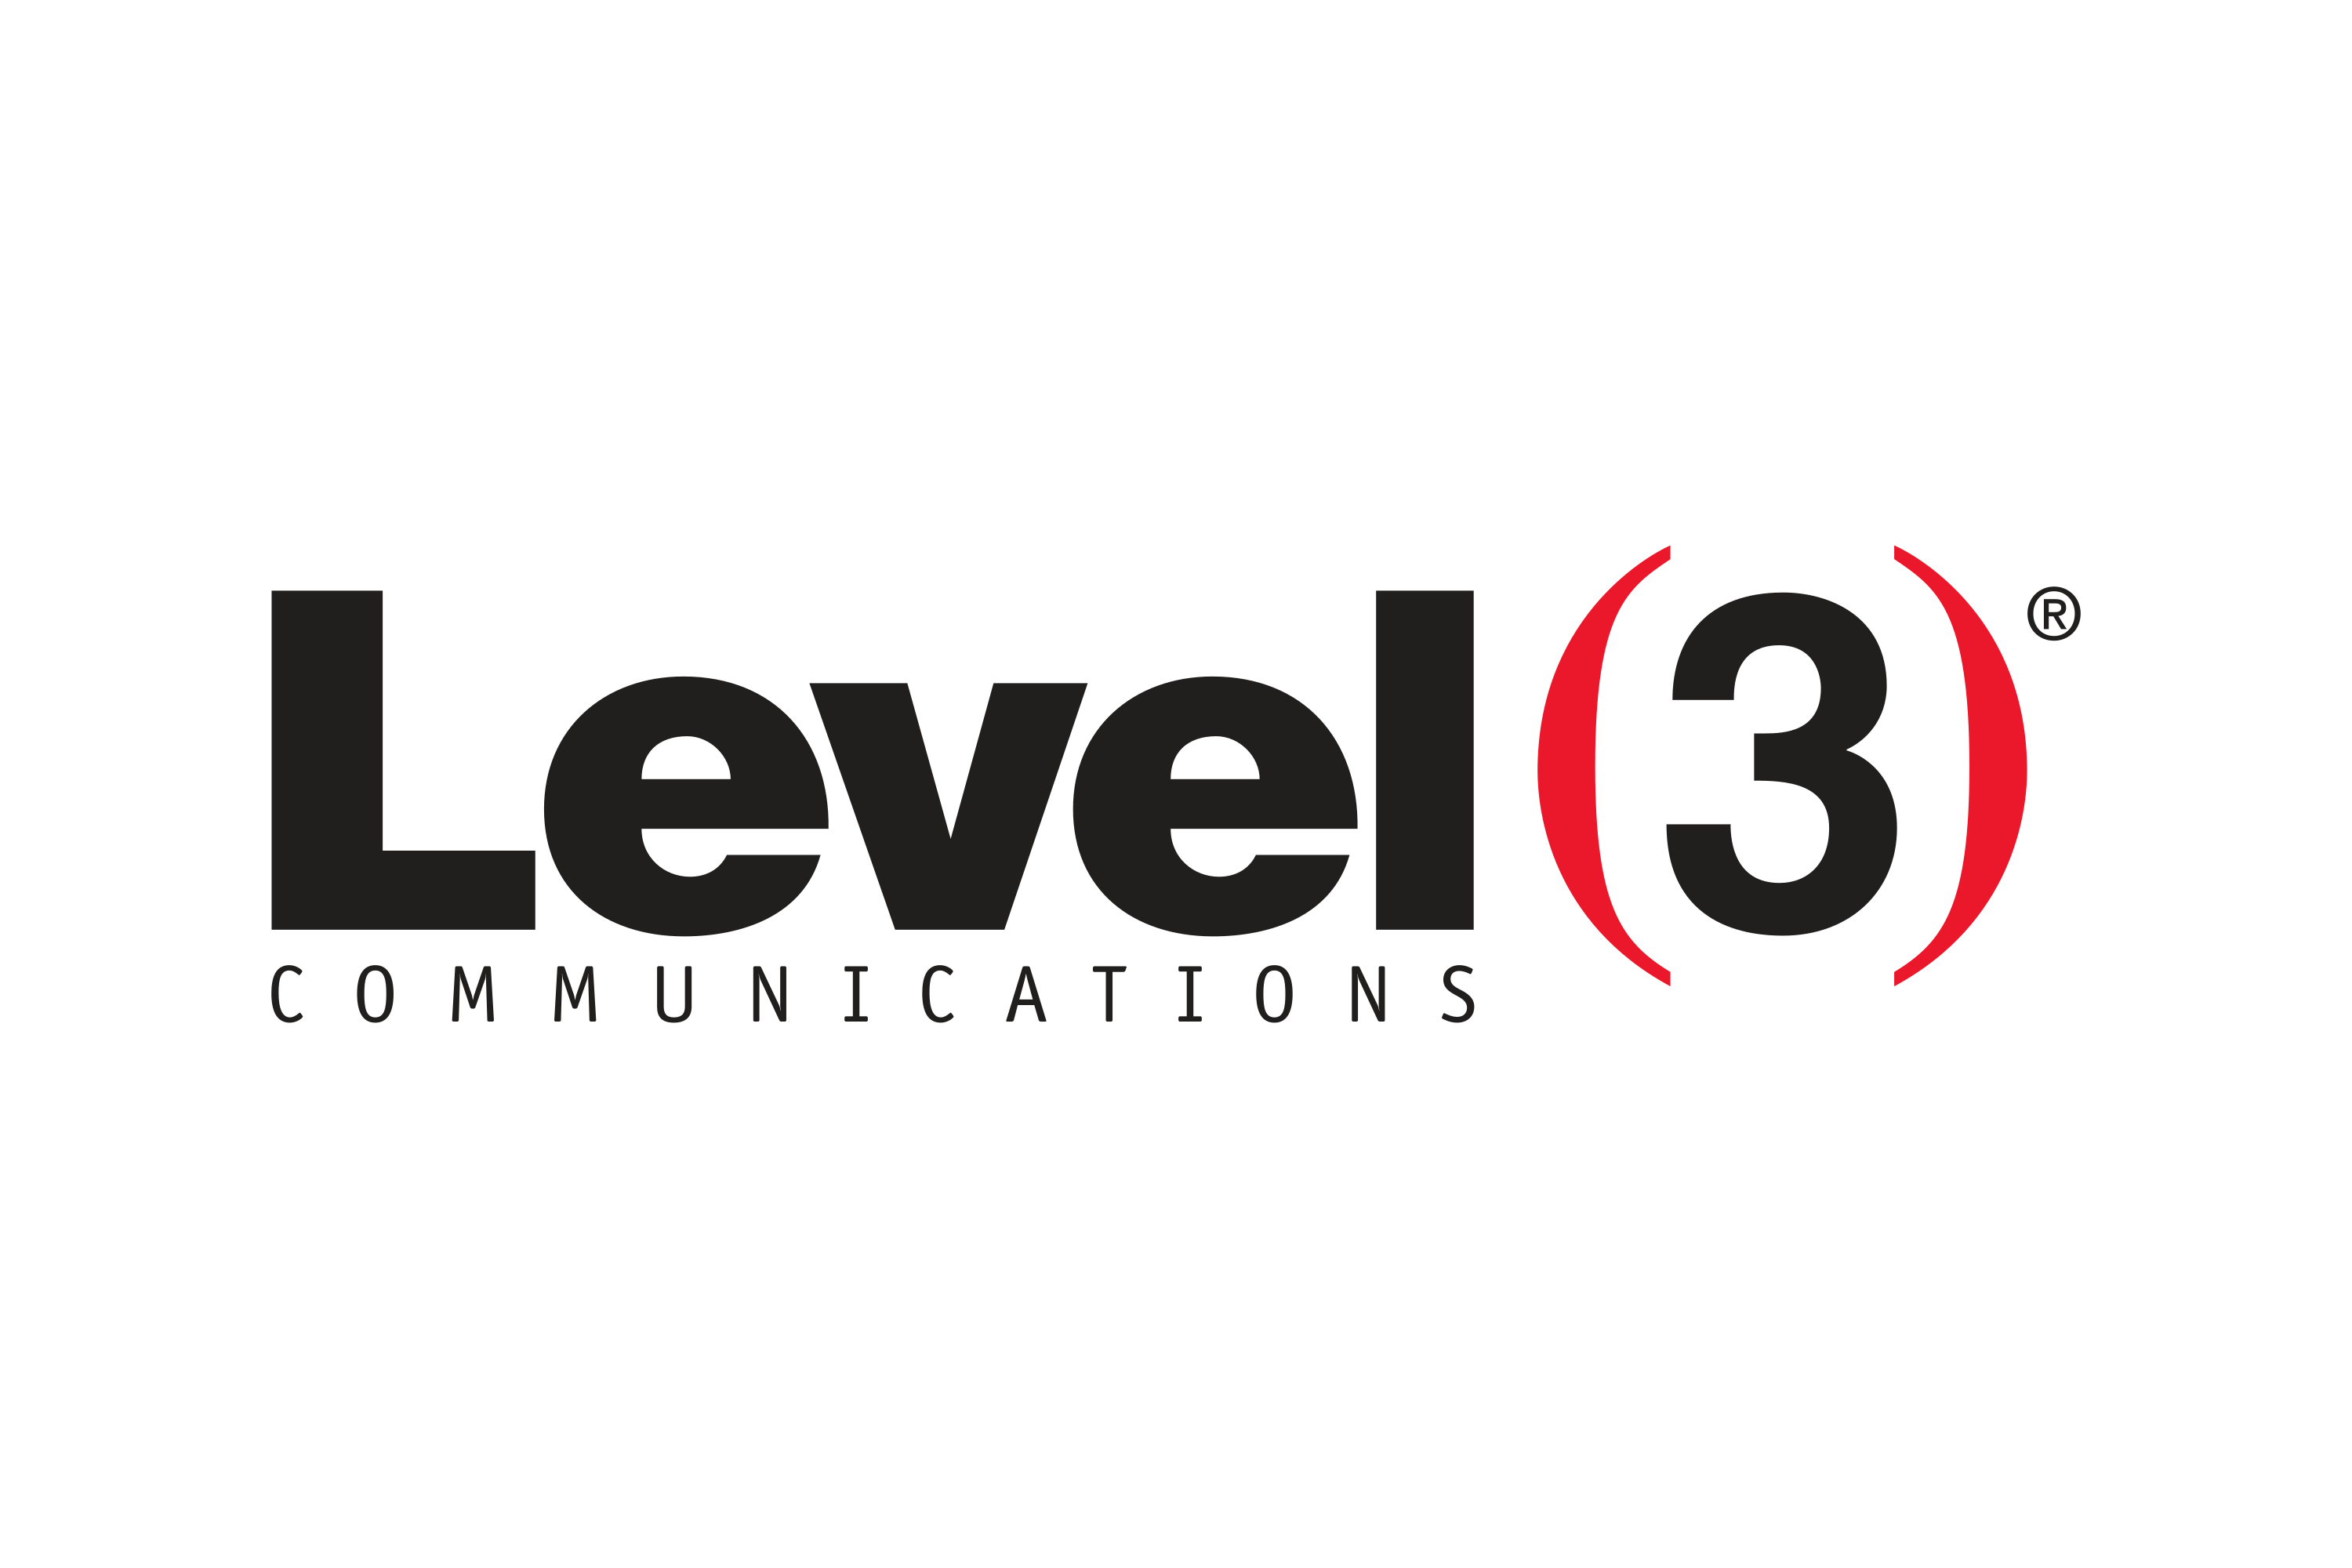 Download Level 3 Communications Logo in SVG Vector or PNG File Format